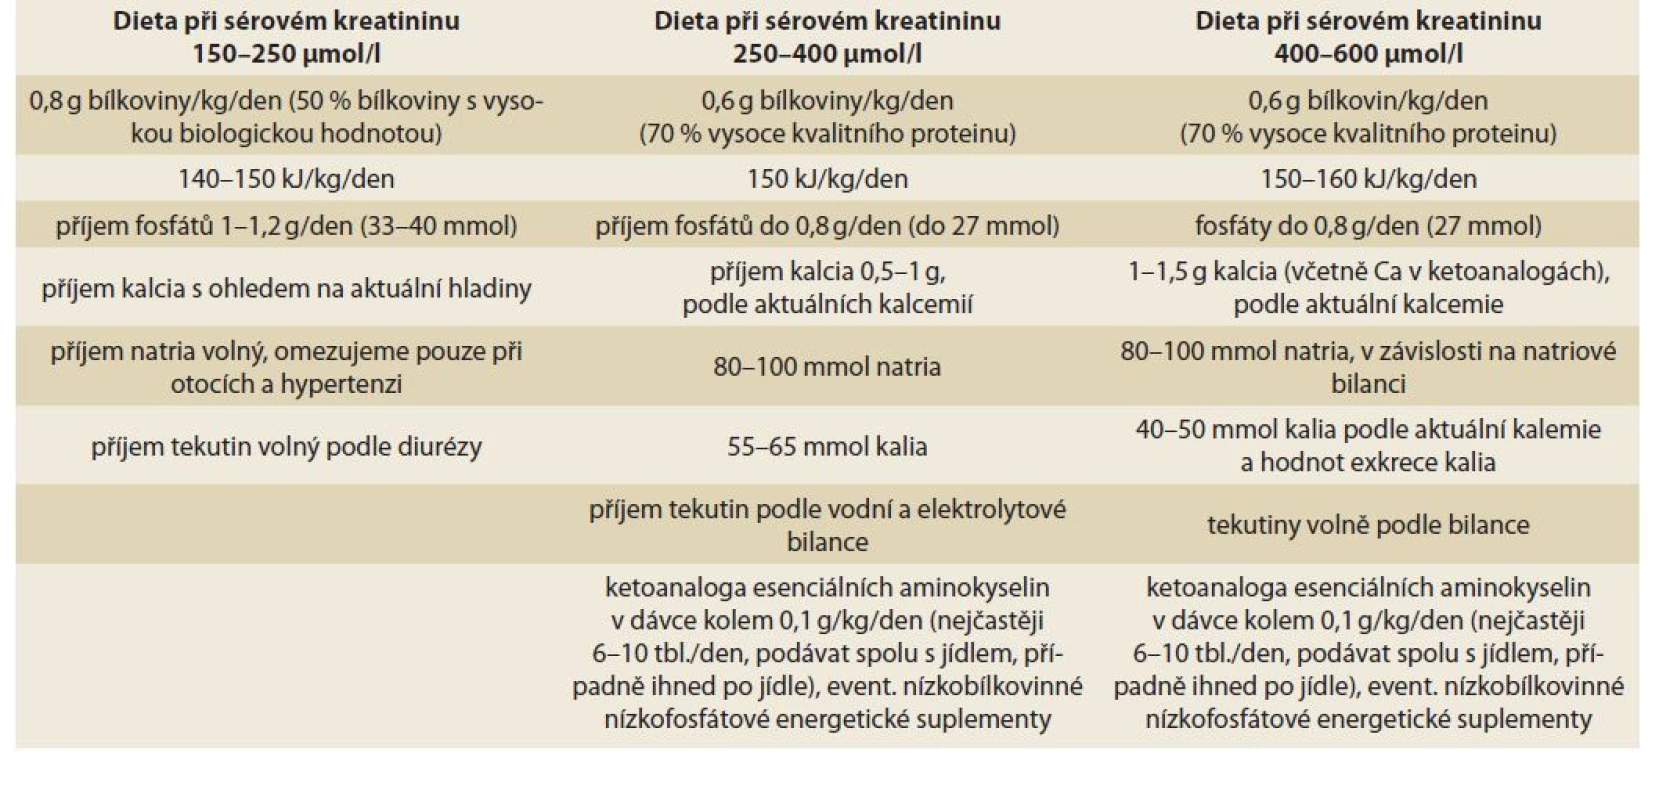 Složení diet u nemocných s onemocněním ledvin.<br>
Tab. 2. The composition of diets in patients with kidney disease.